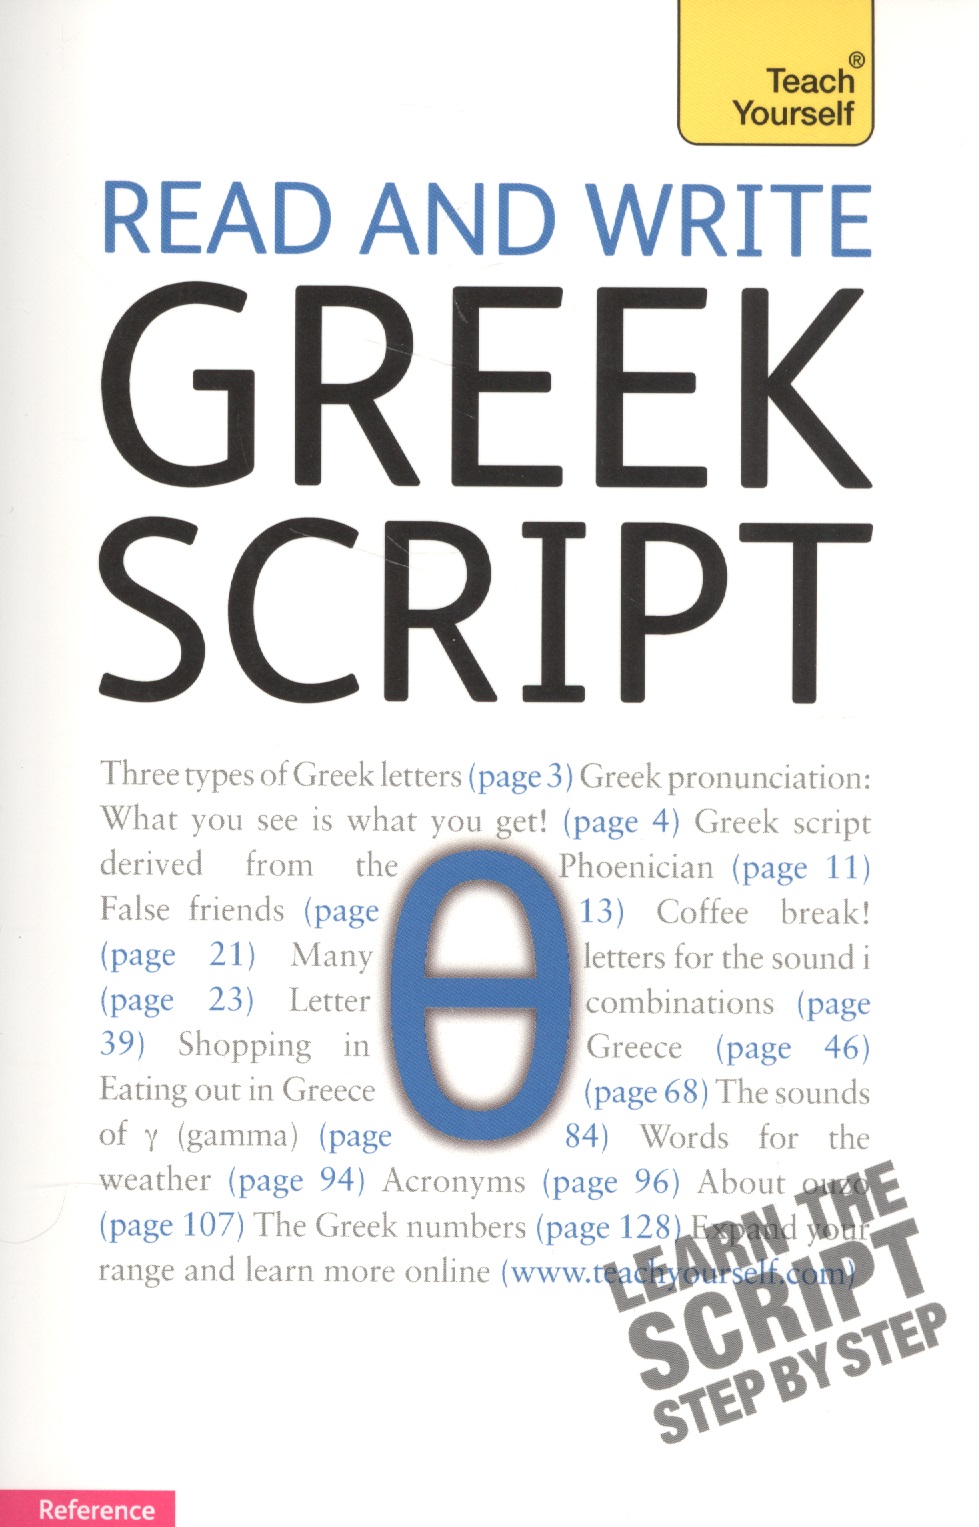 Read and write greek script